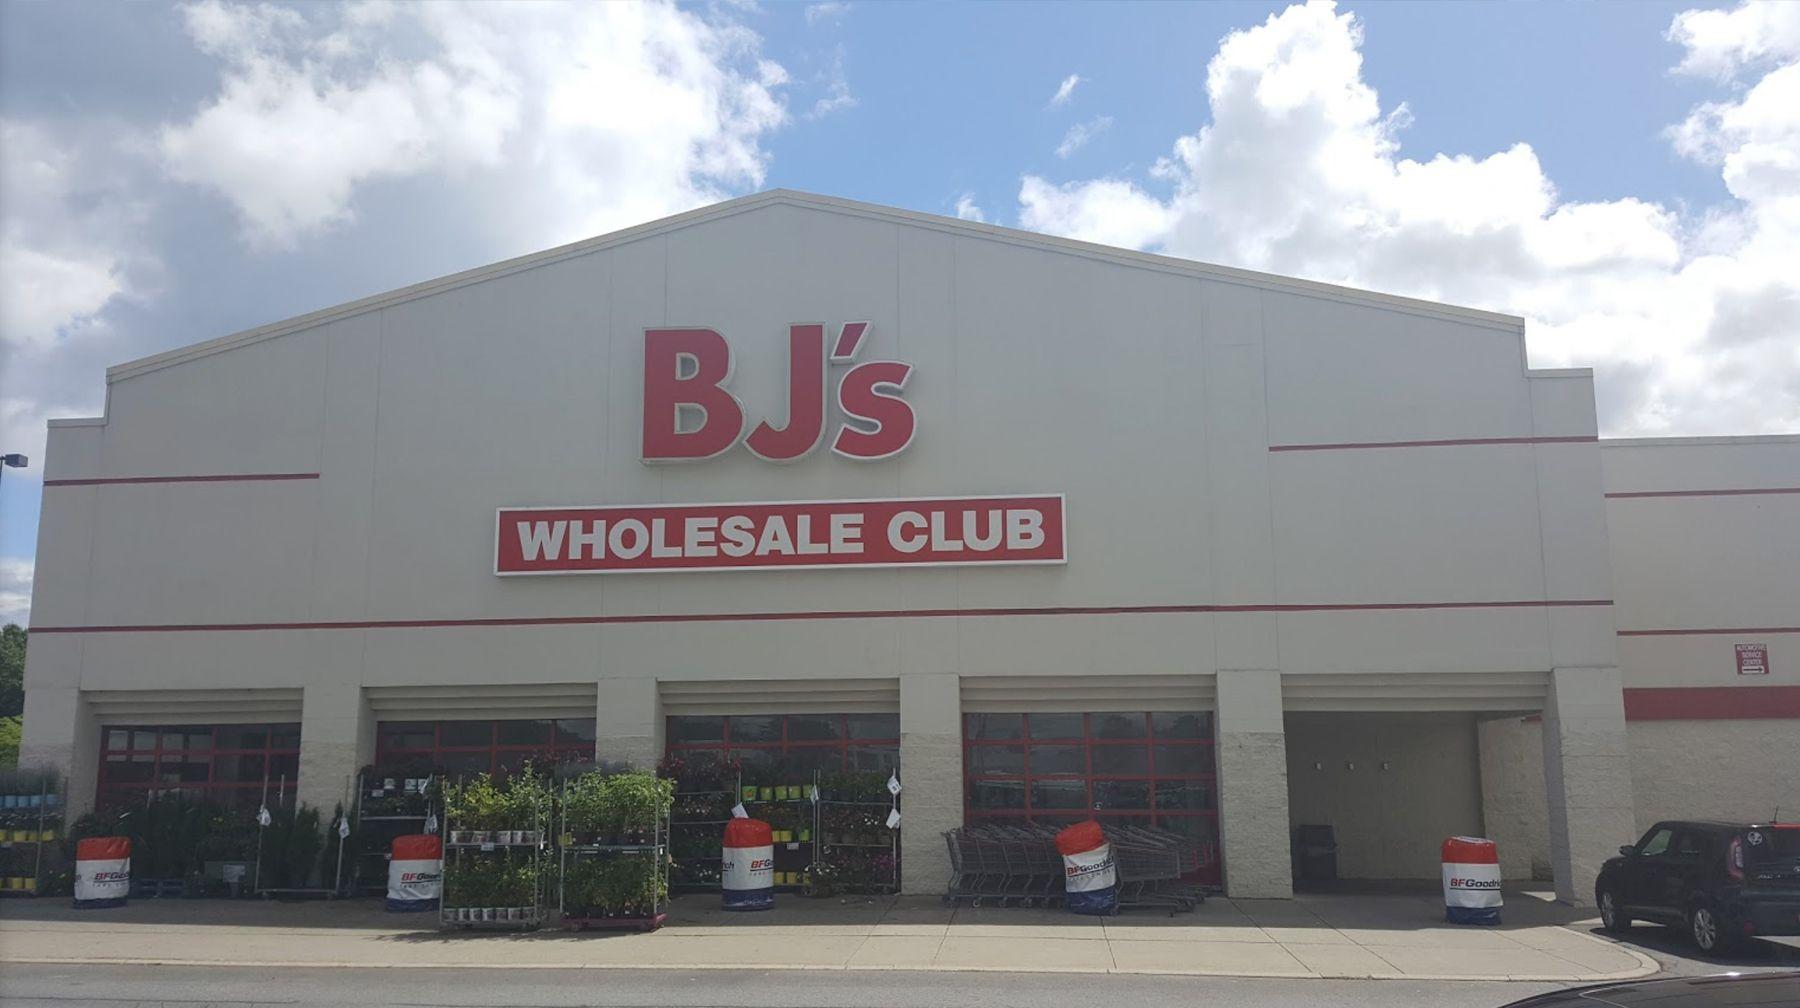 BJ's Club Logo - BJ's Wholesale Club - Bonacquisti Brothers Construction